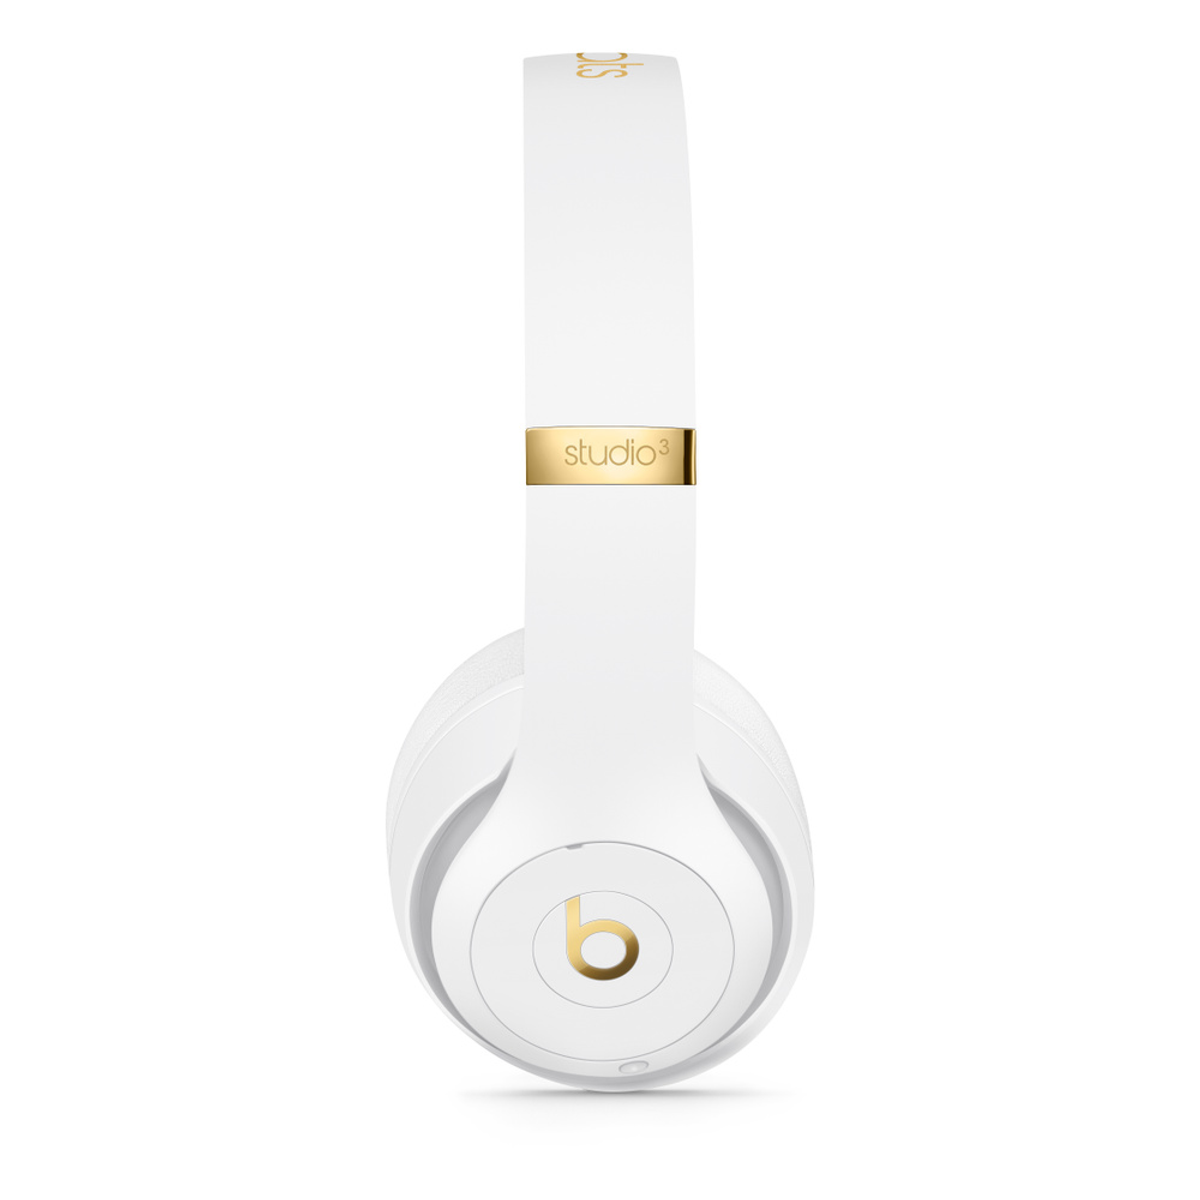 BEATS Bluetooth Over-ear Weiß Studio3, Kopfhörer